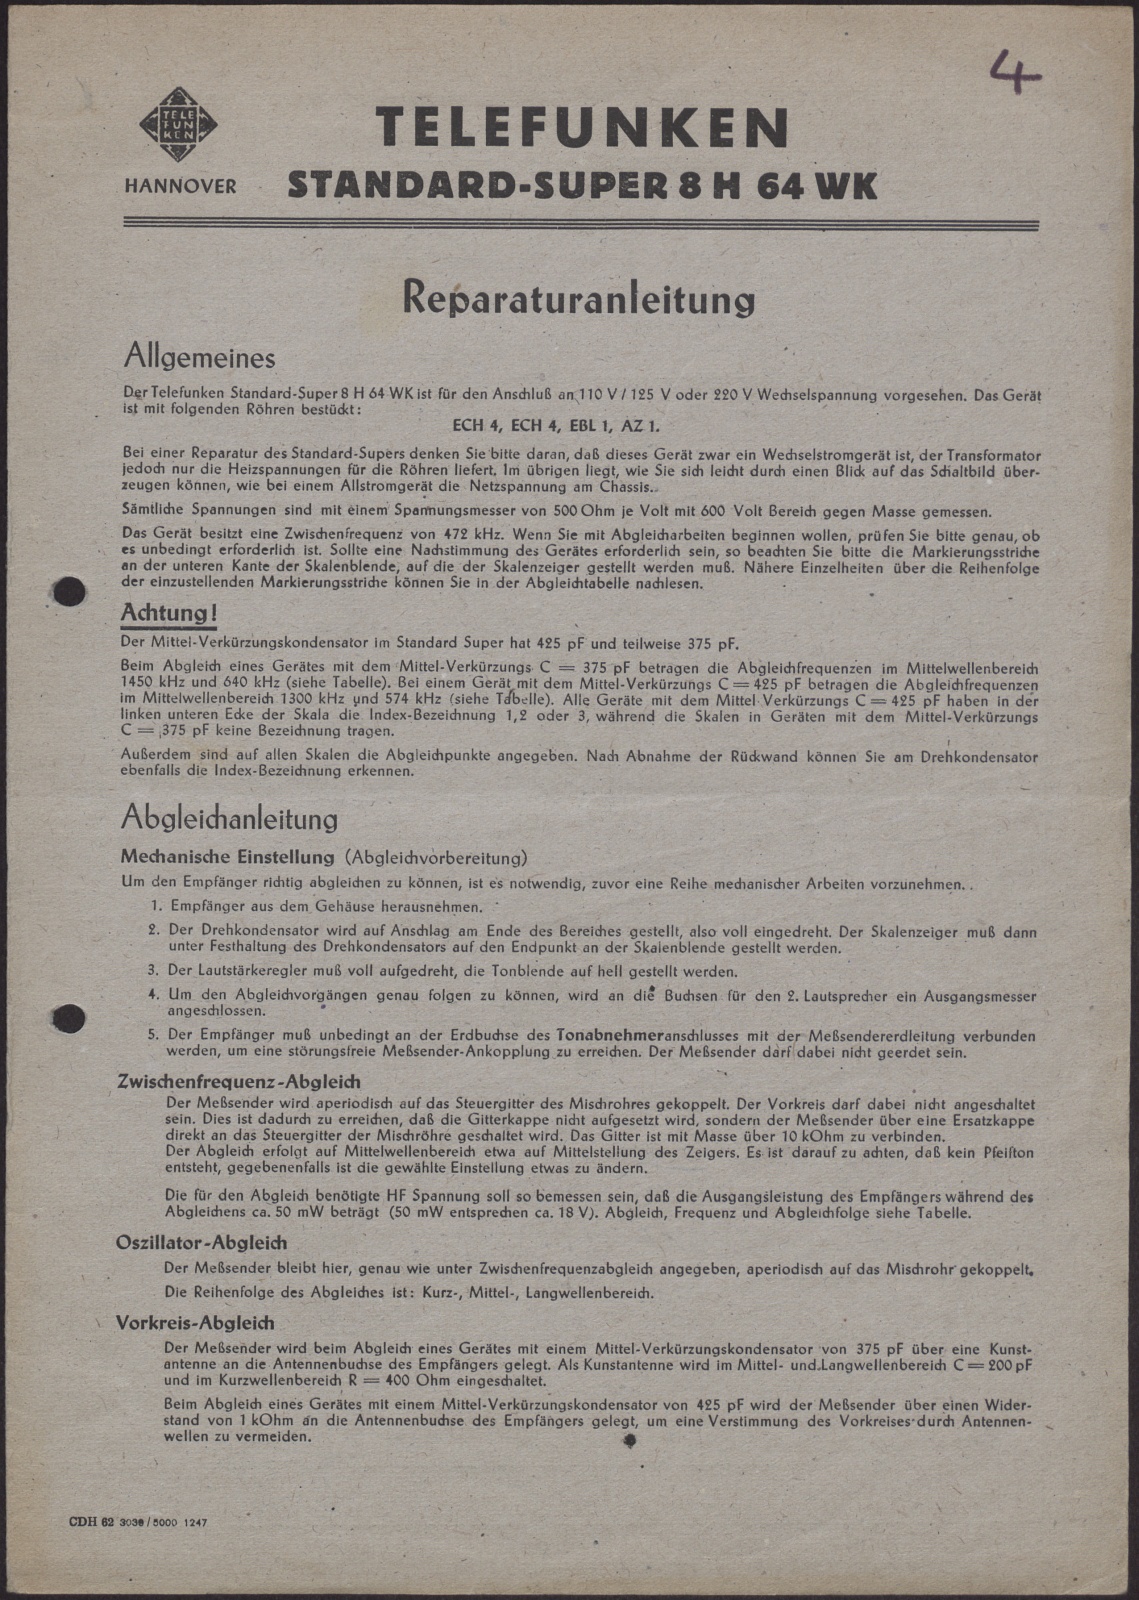 Bedienungsanleitung: Telefunken Standard Super 8 H 64 WK Reperaturanleitung (Stiftung Deutsches Technikmuseum Berlin CC0)